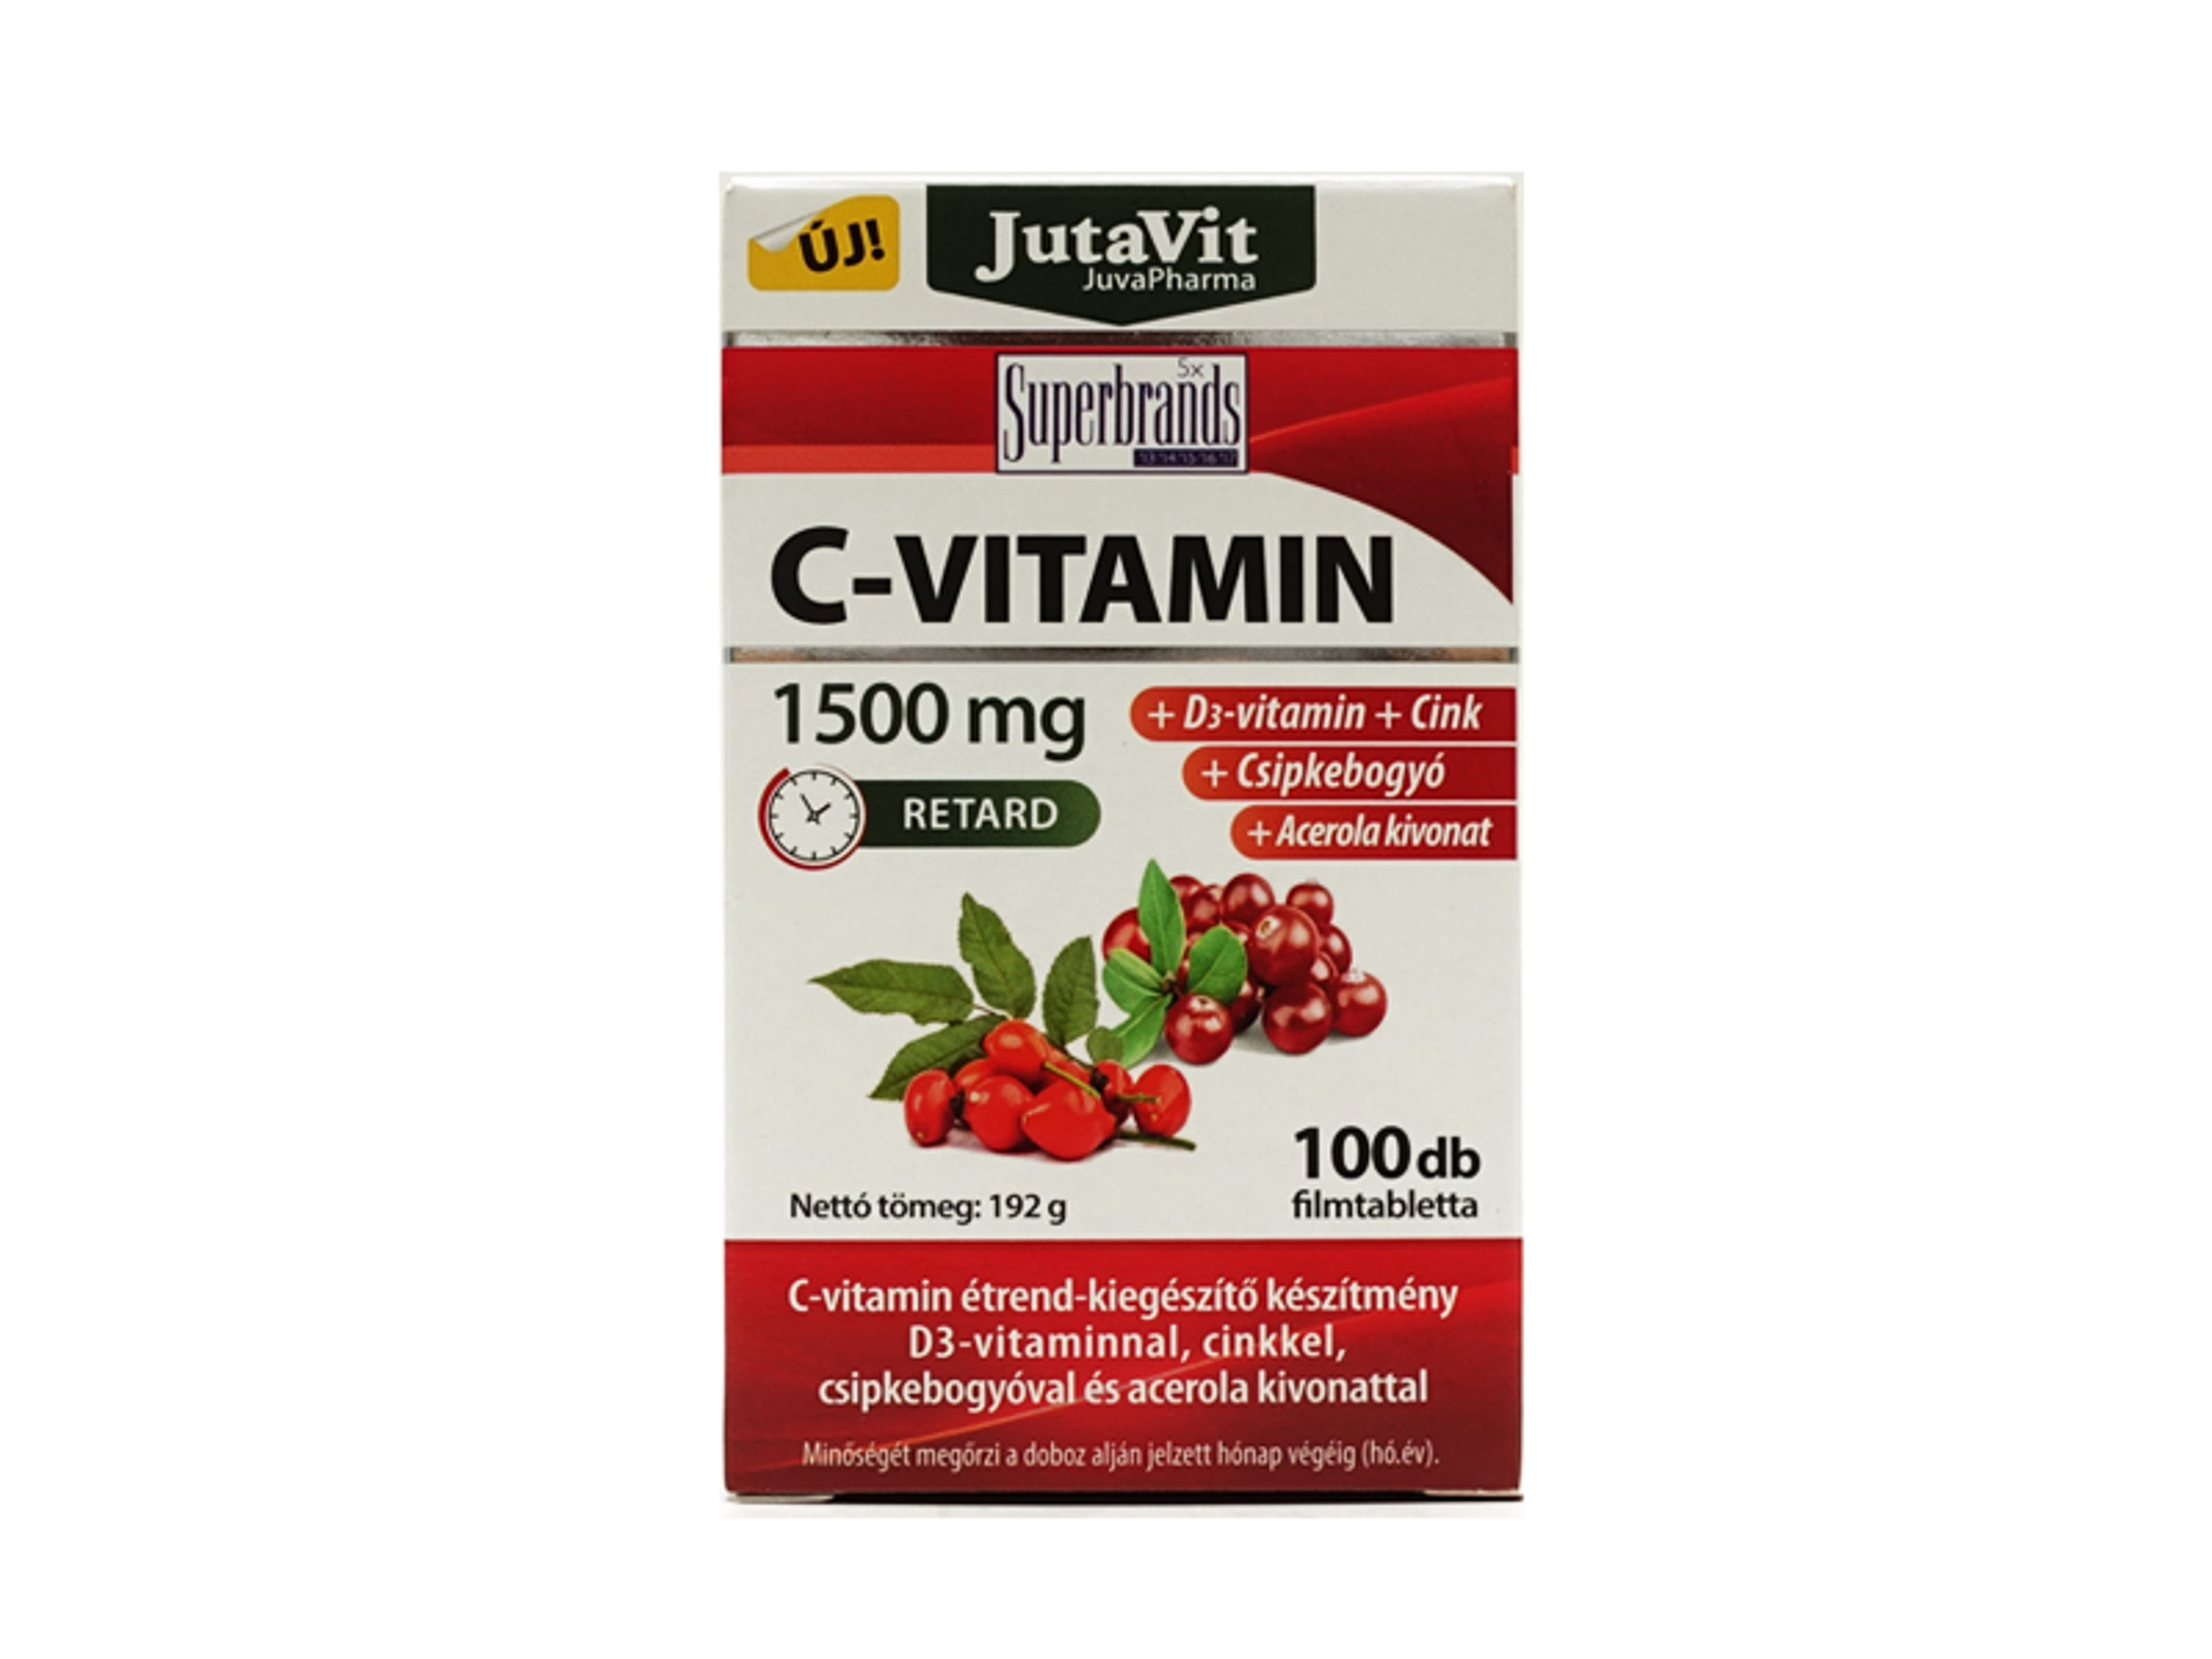 JutaVit C-Vitamin 1500mg Csipkebogyó+ Acerola+D3-Vitamin Filmtabletta - 100 db-2